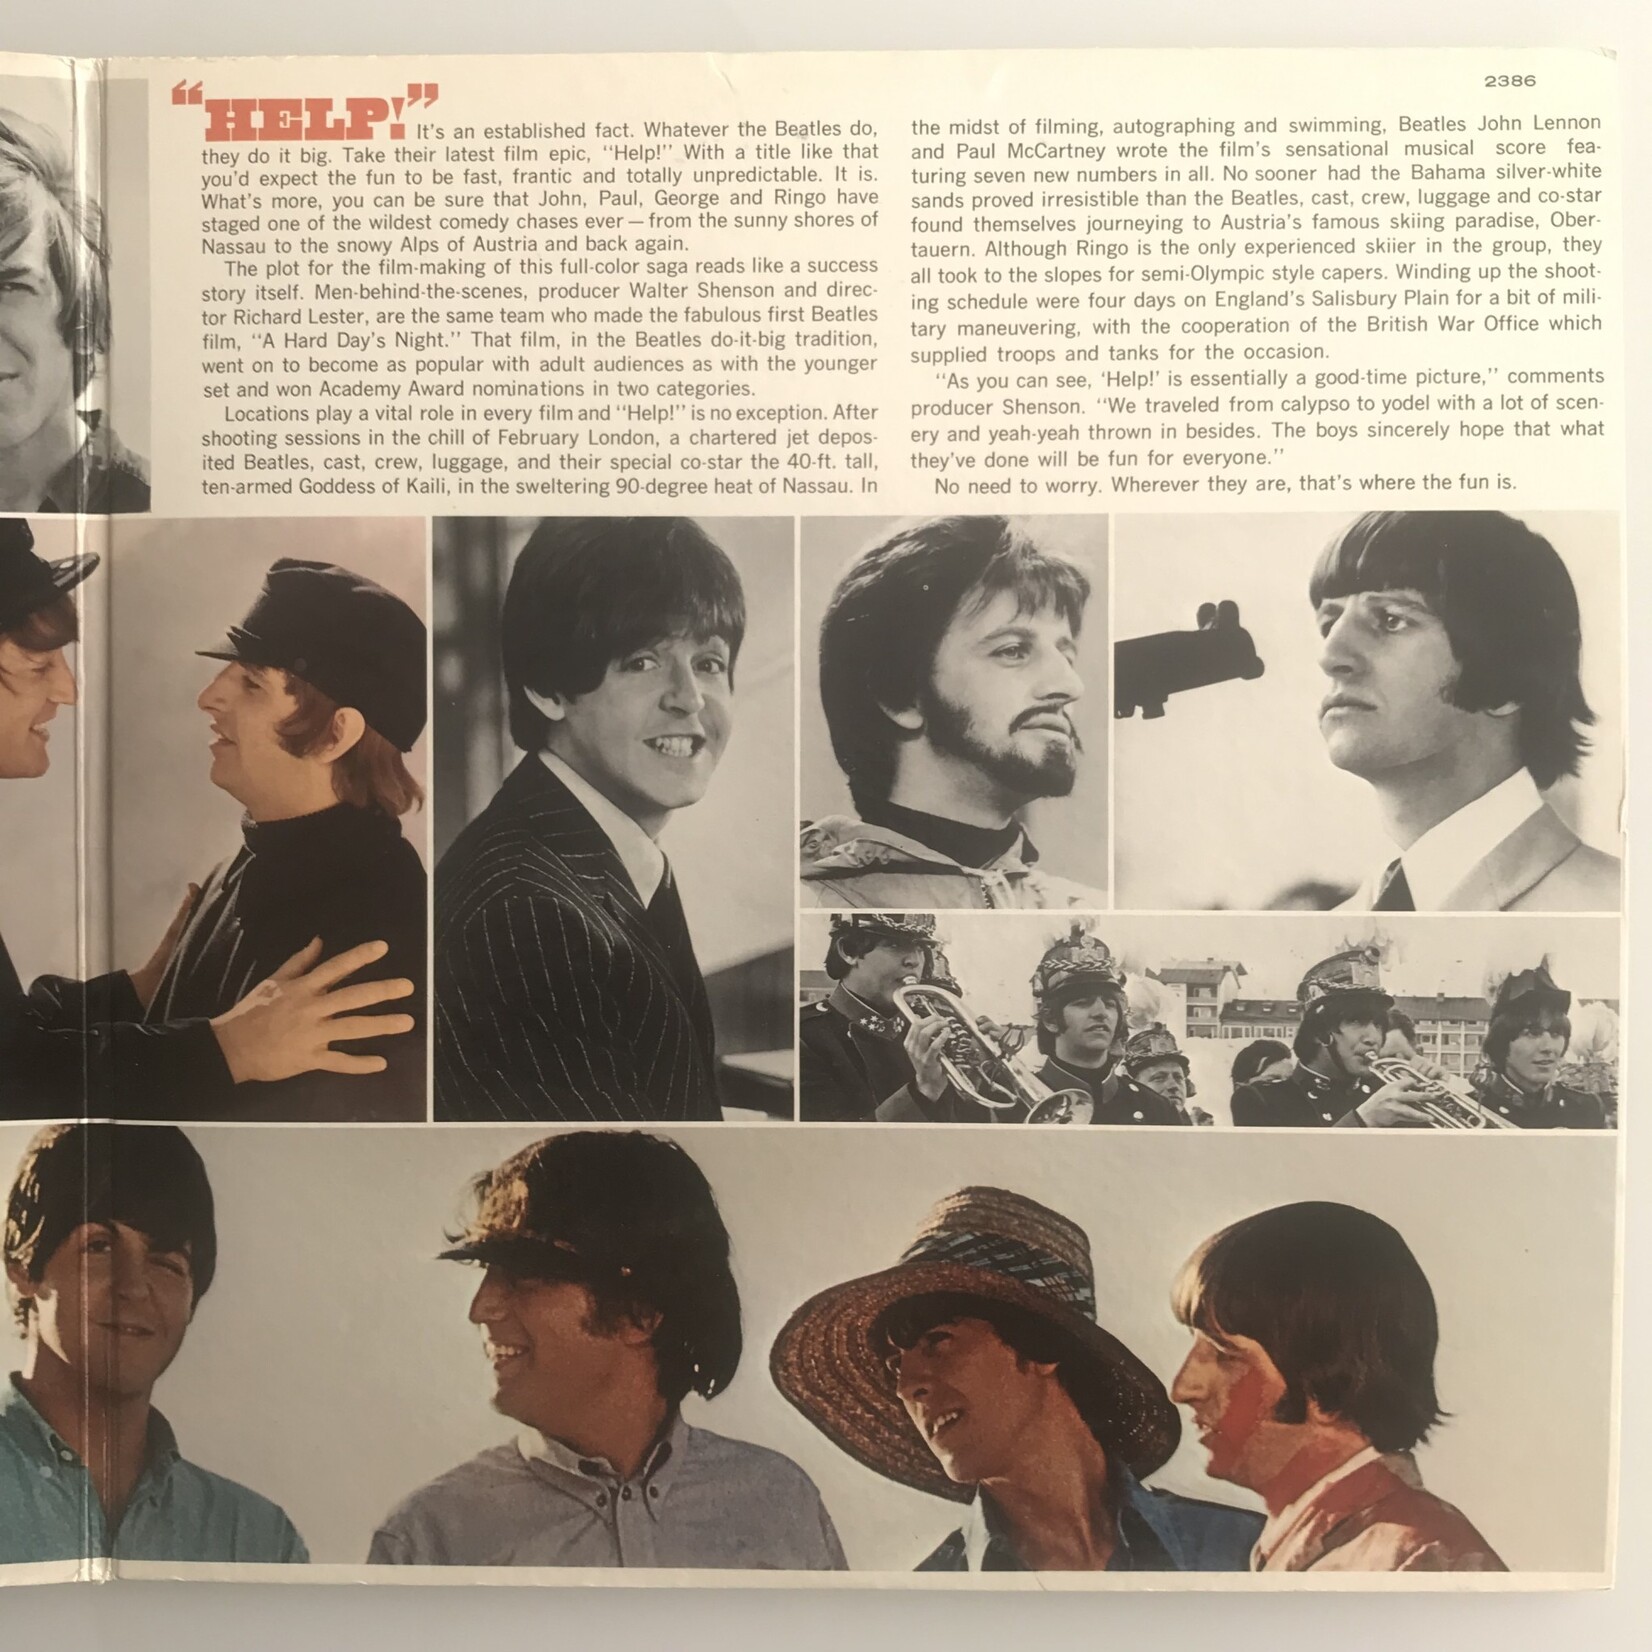 Beatles - Help! Original Soundtrack - Vinyl LP (USED)